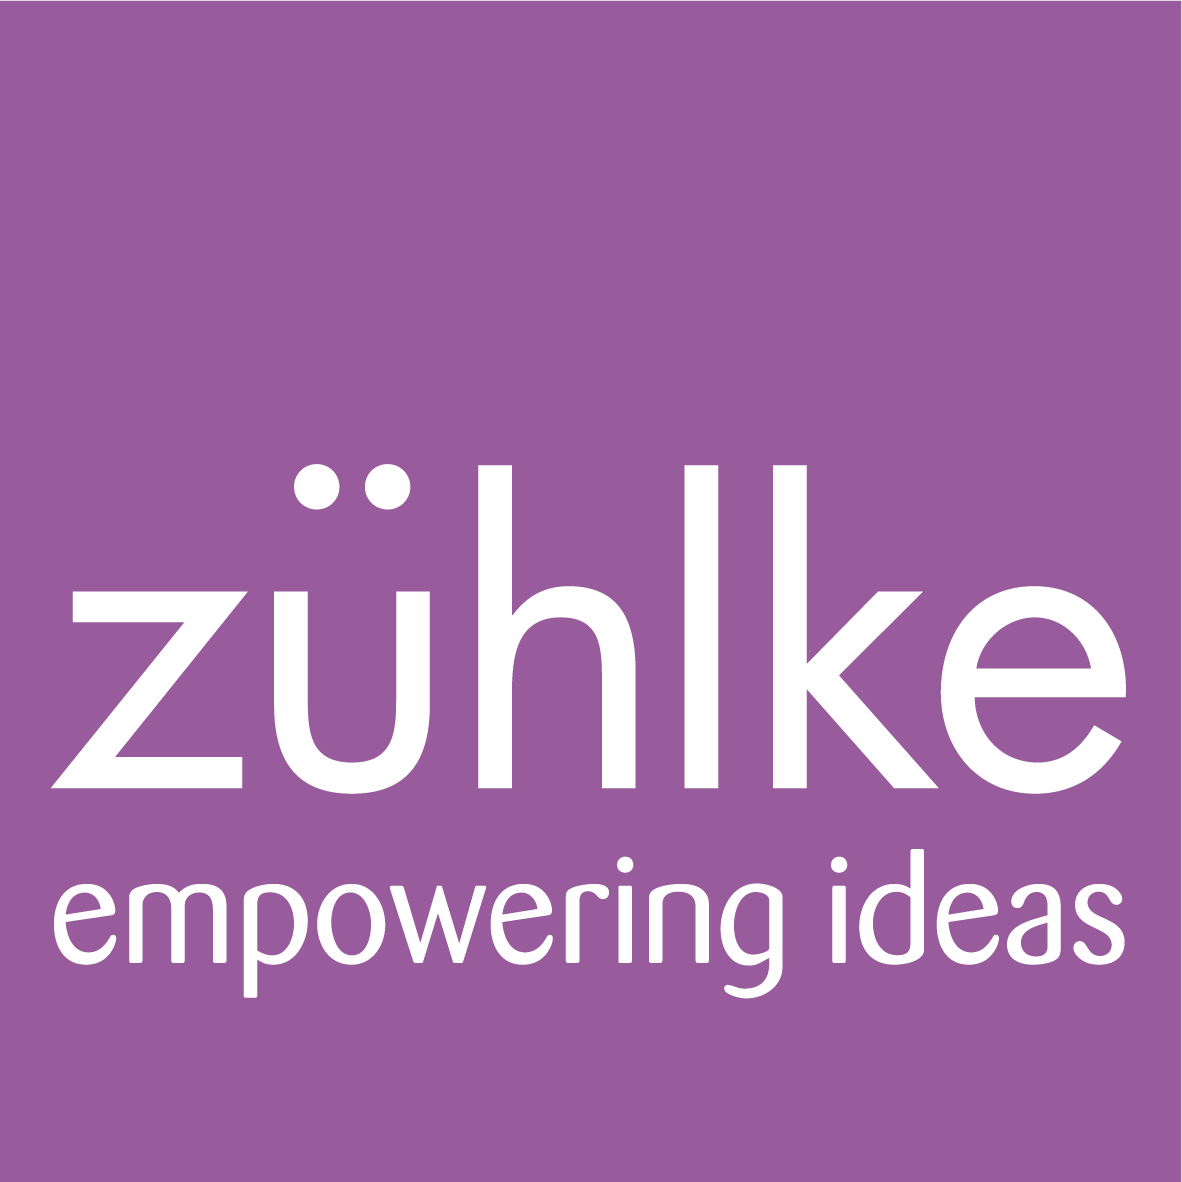 Zühlke logo - empowering ideas - basic RGB